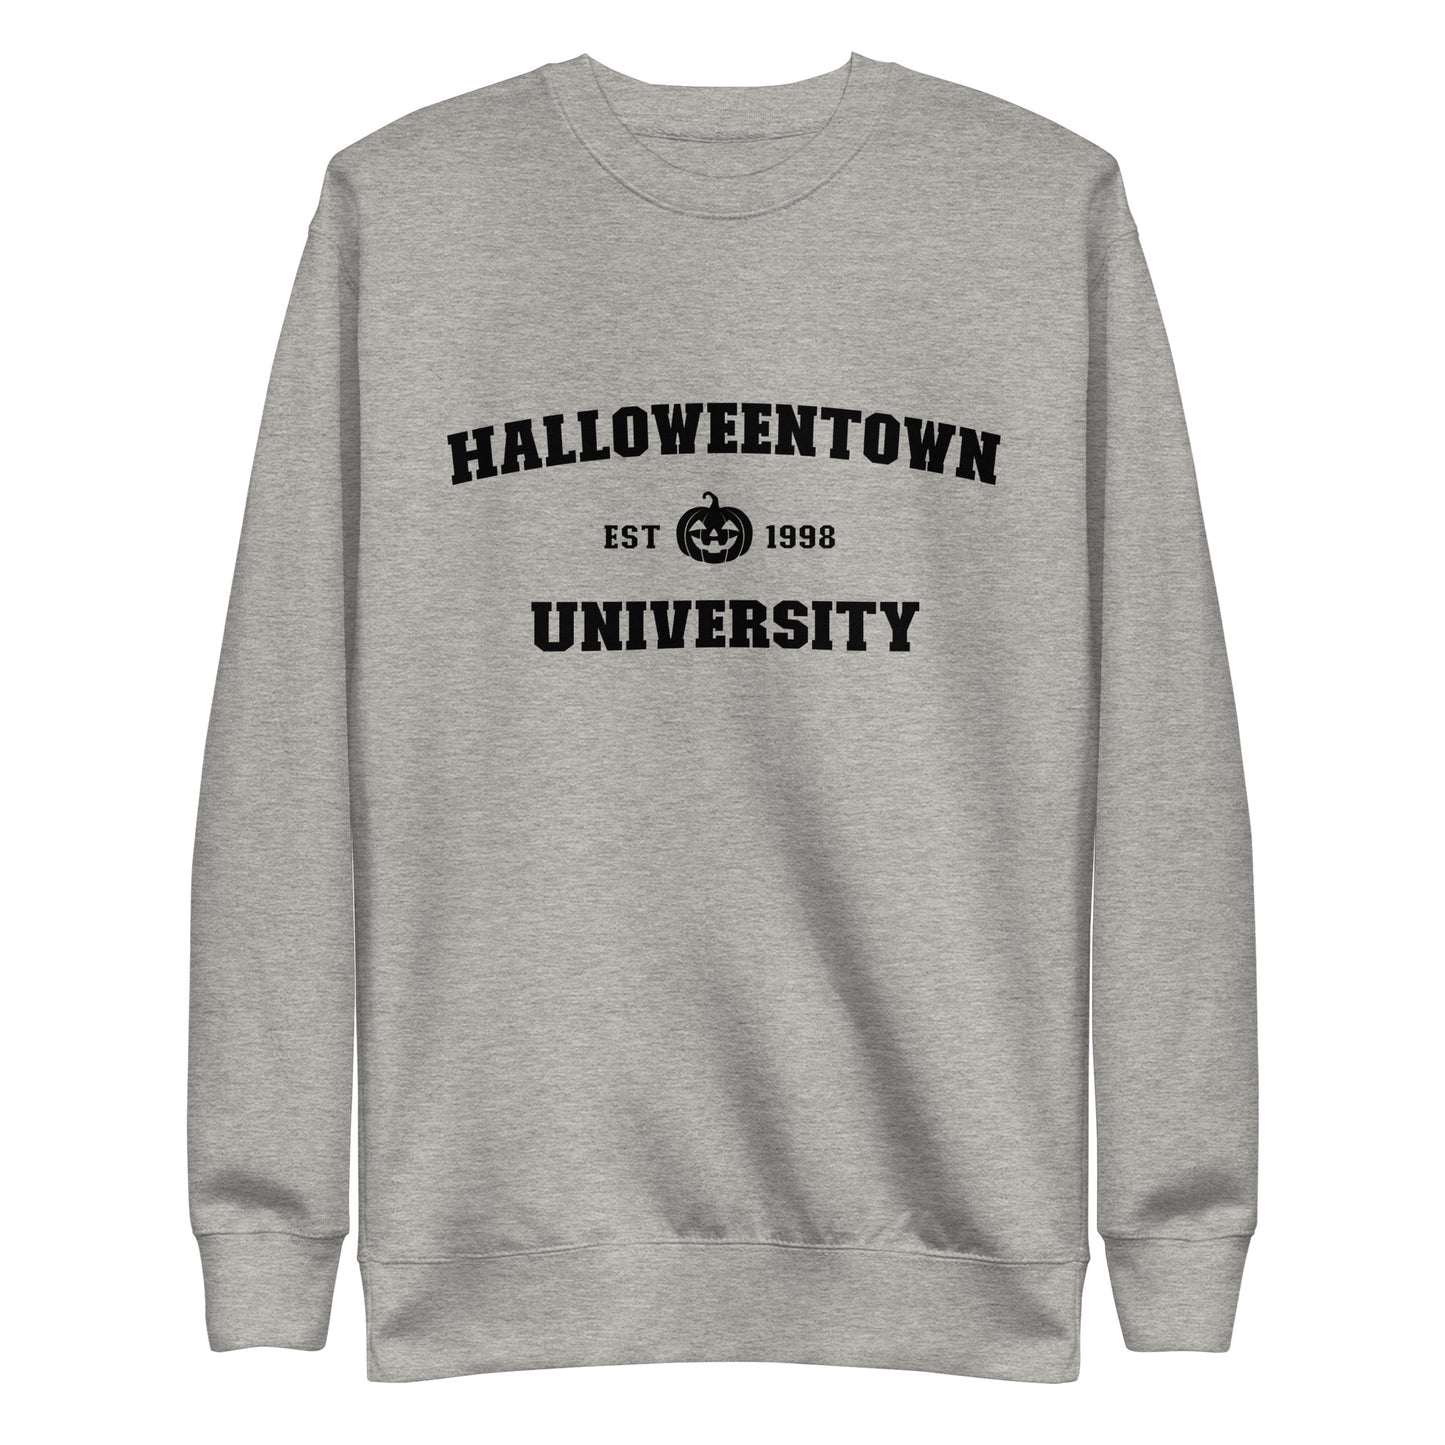 Halloweentown University Premium Sweatshirt